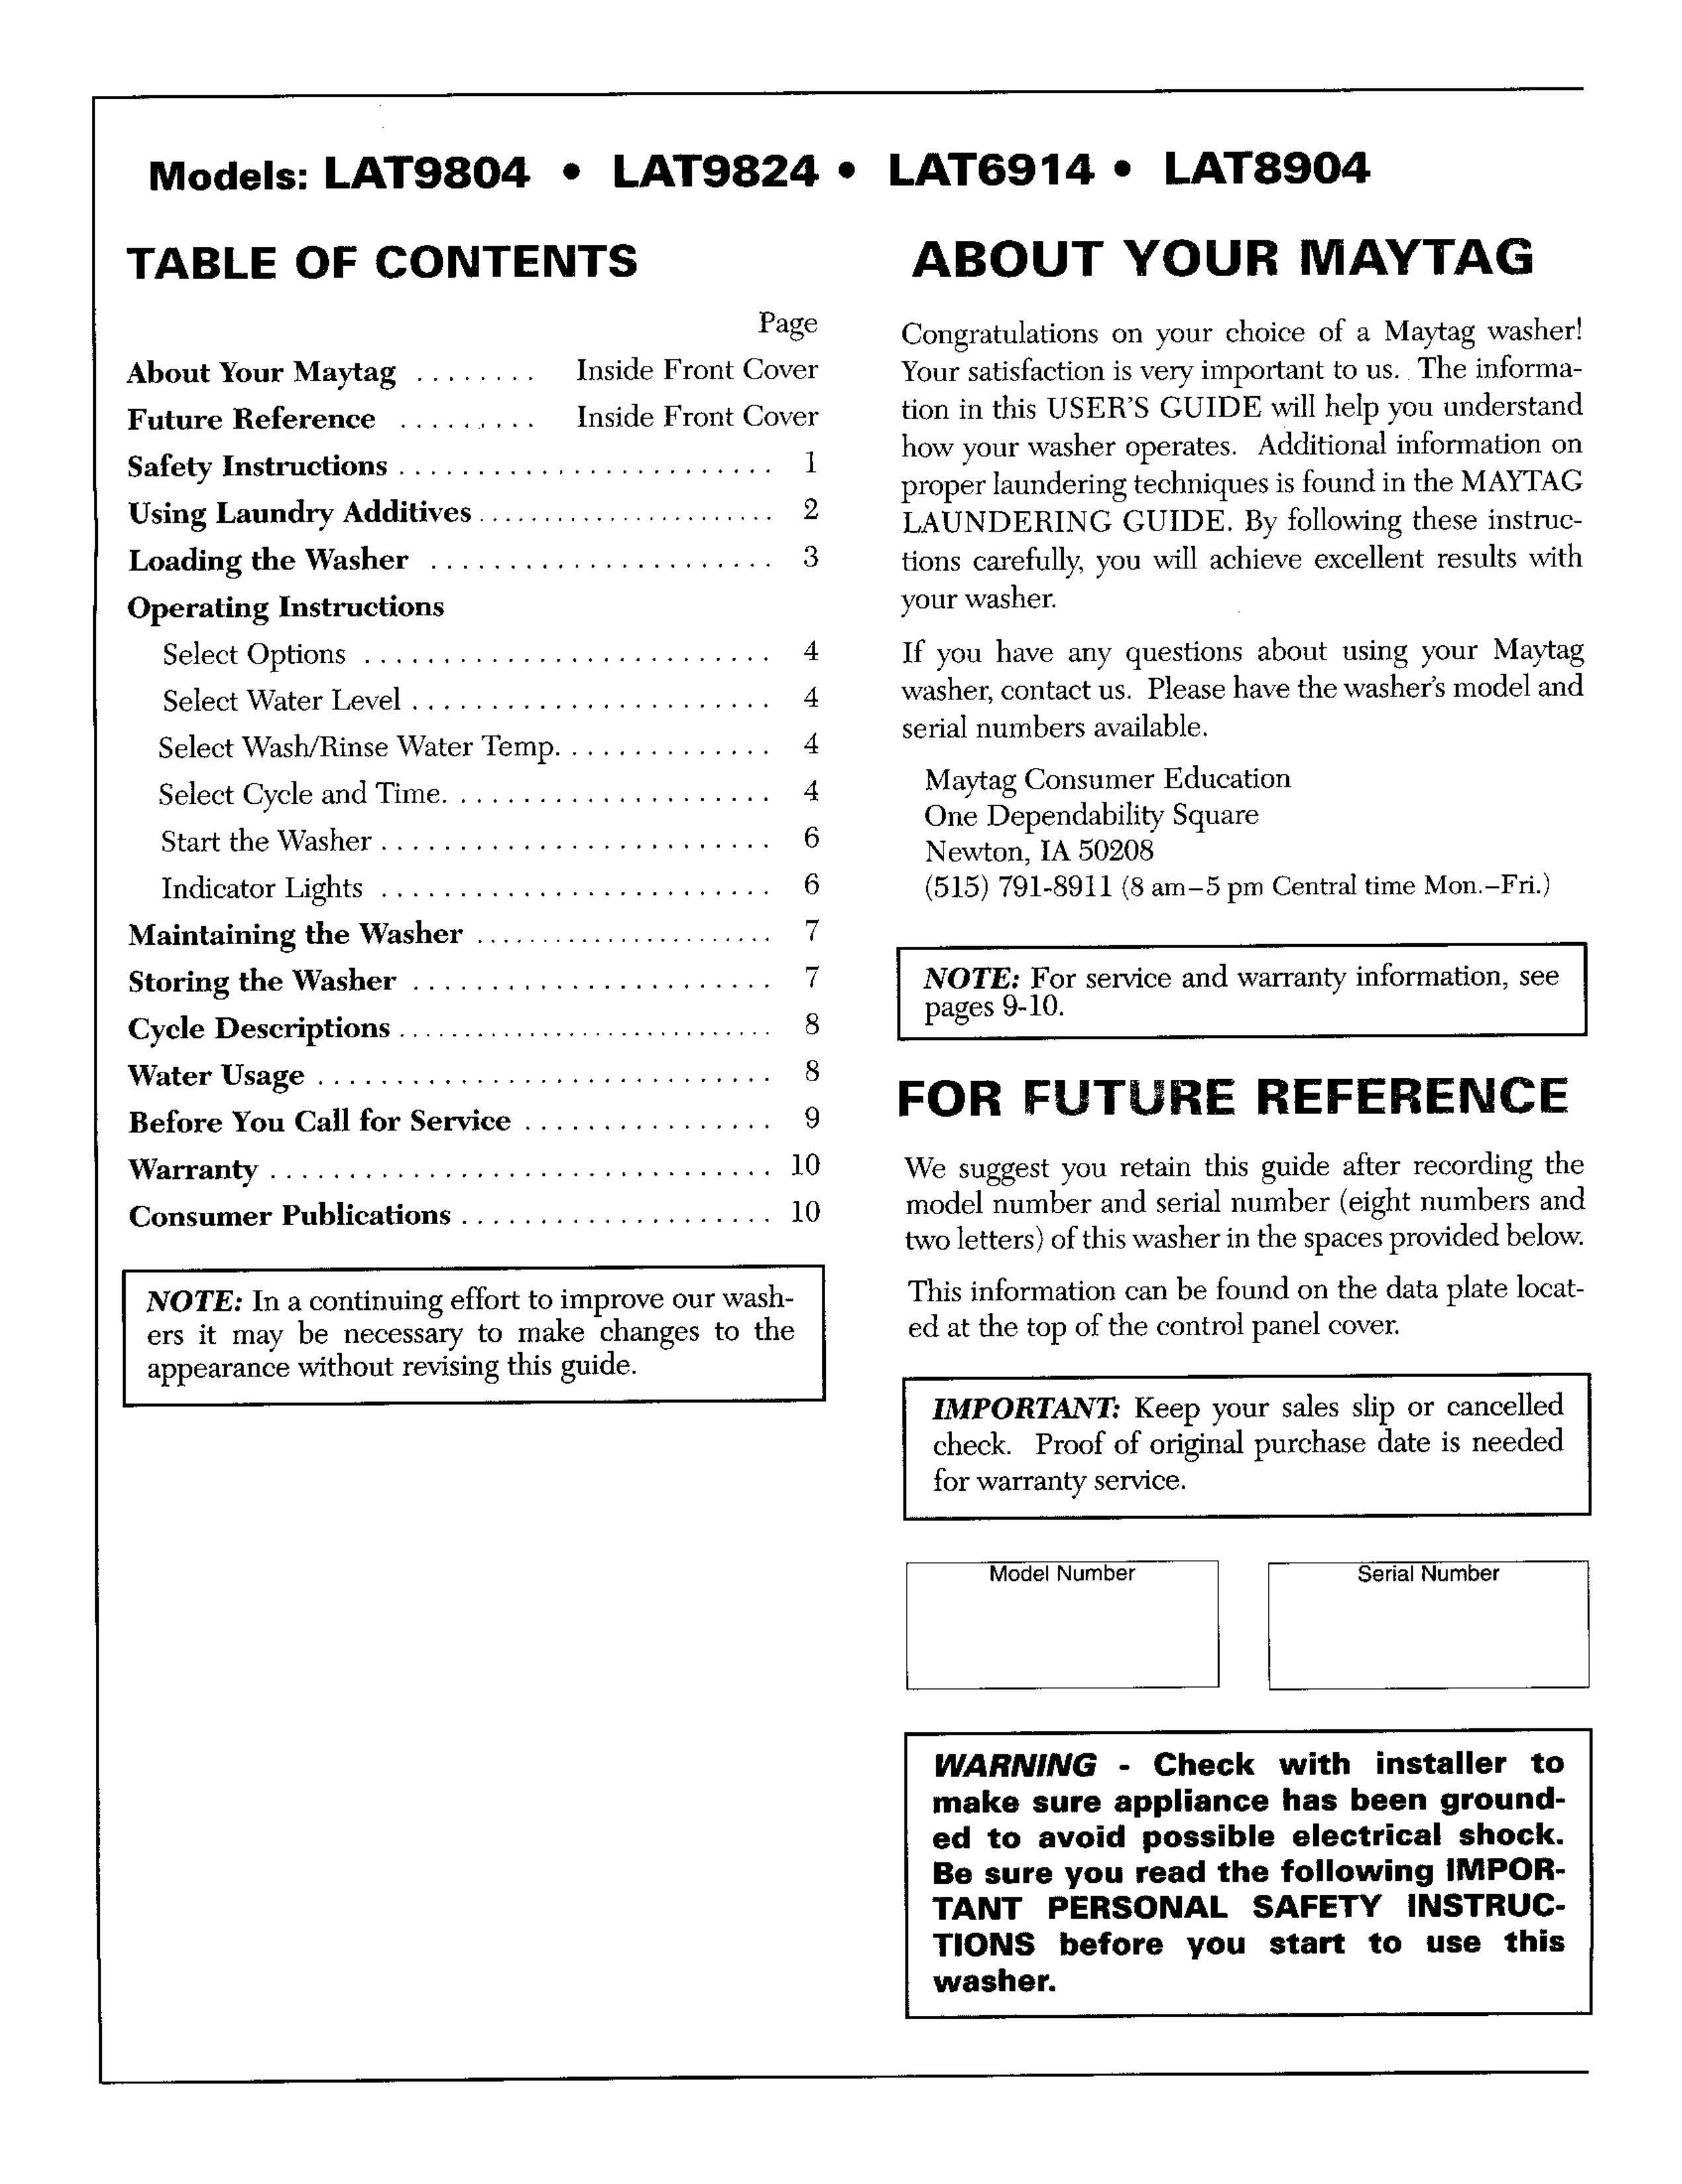 Maytag LAT6914 Washer/Dryer User Manual